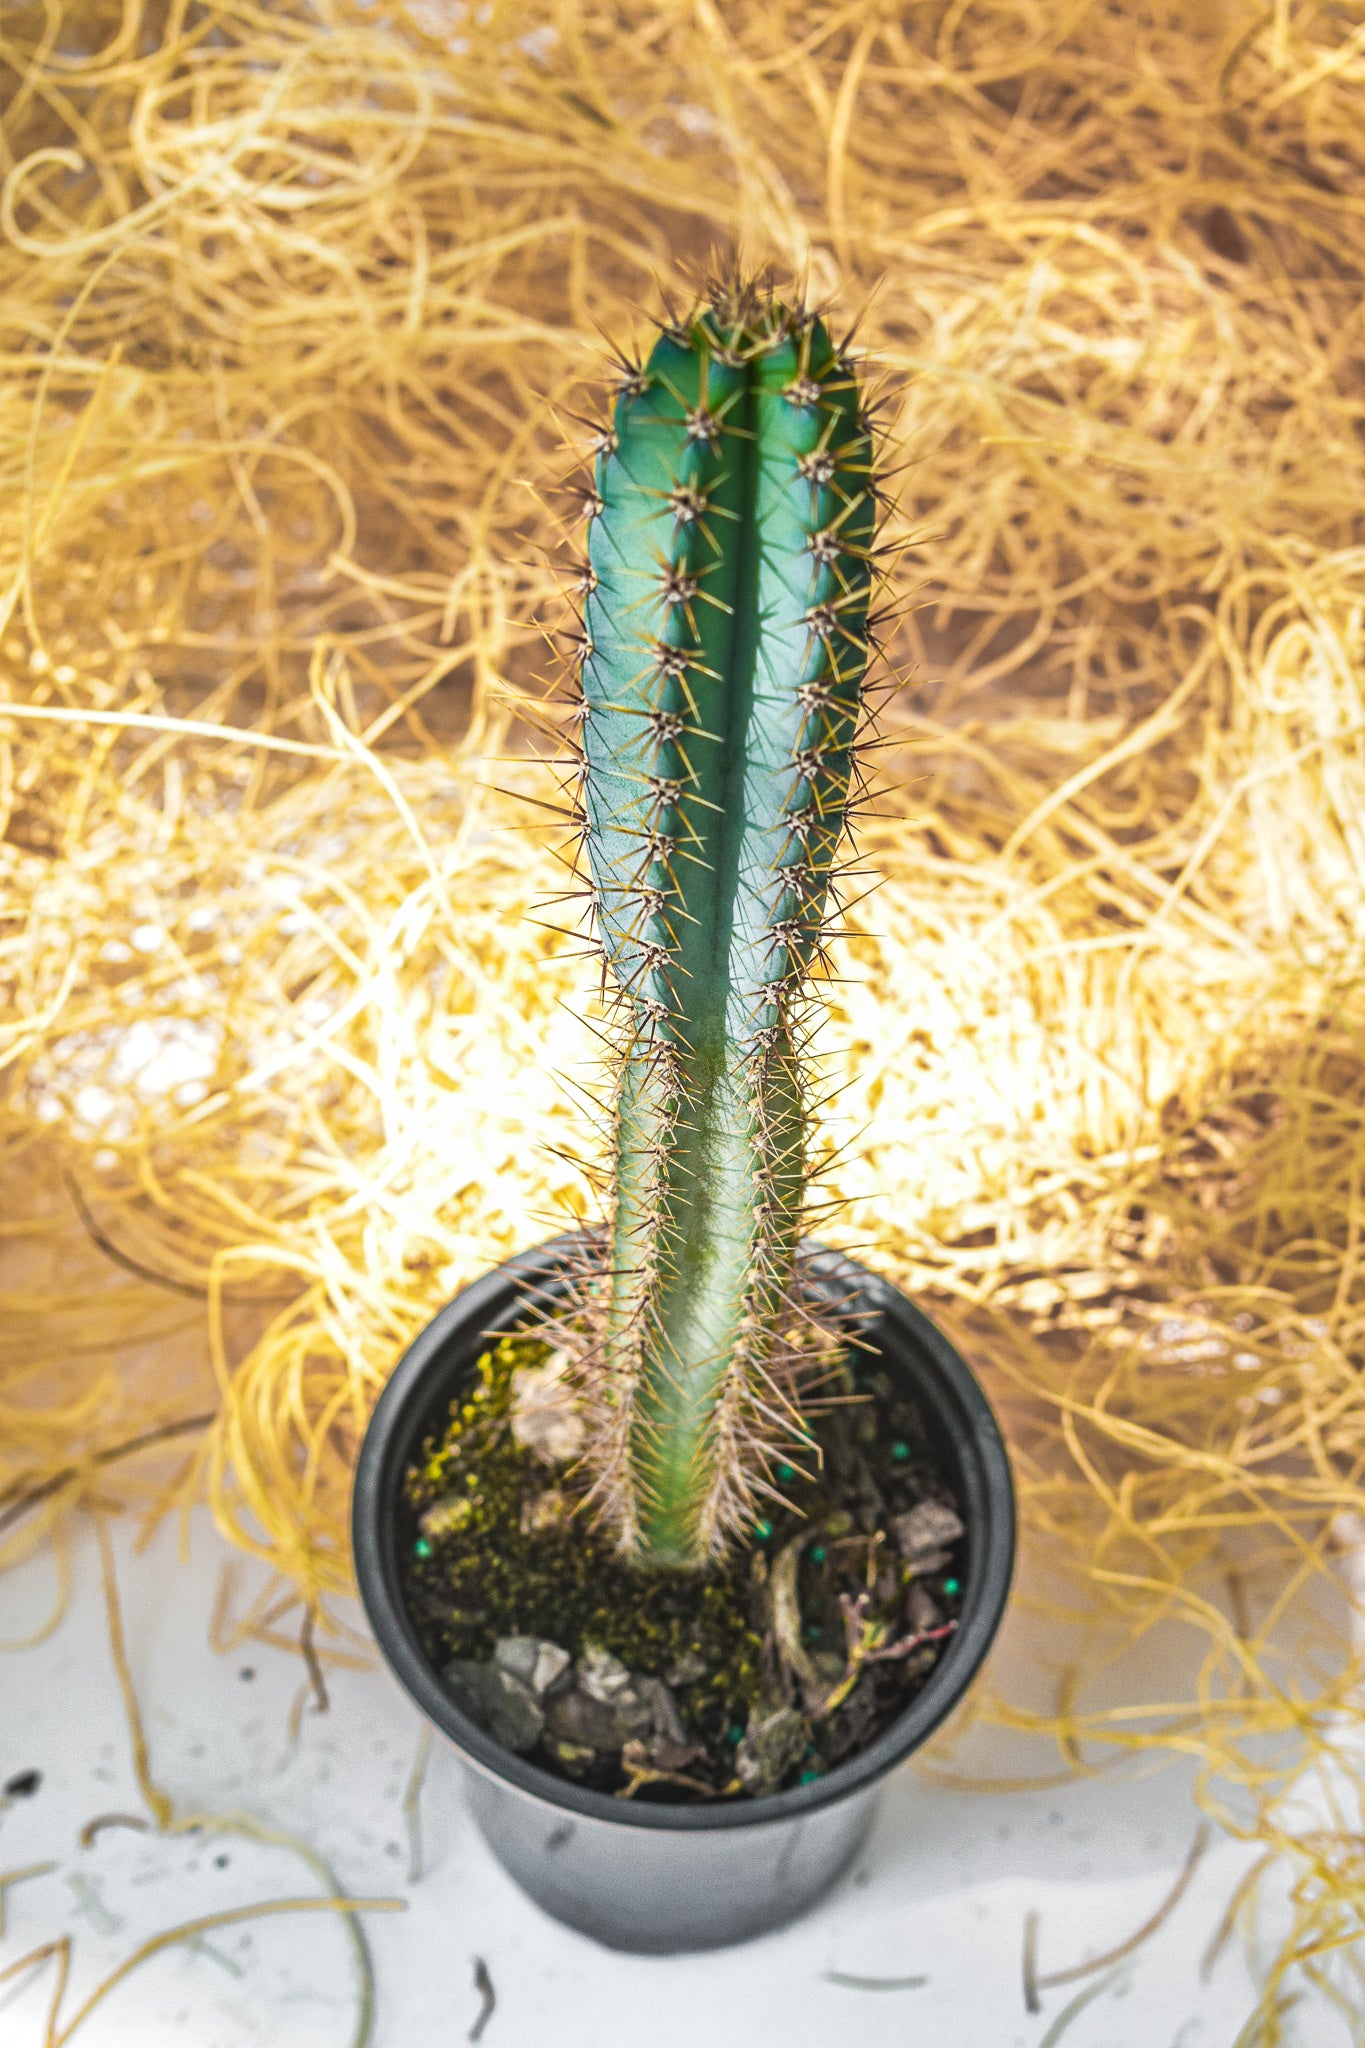 Saguaro cactus, Carnegiea Gigantean - Belle's Greenhouse